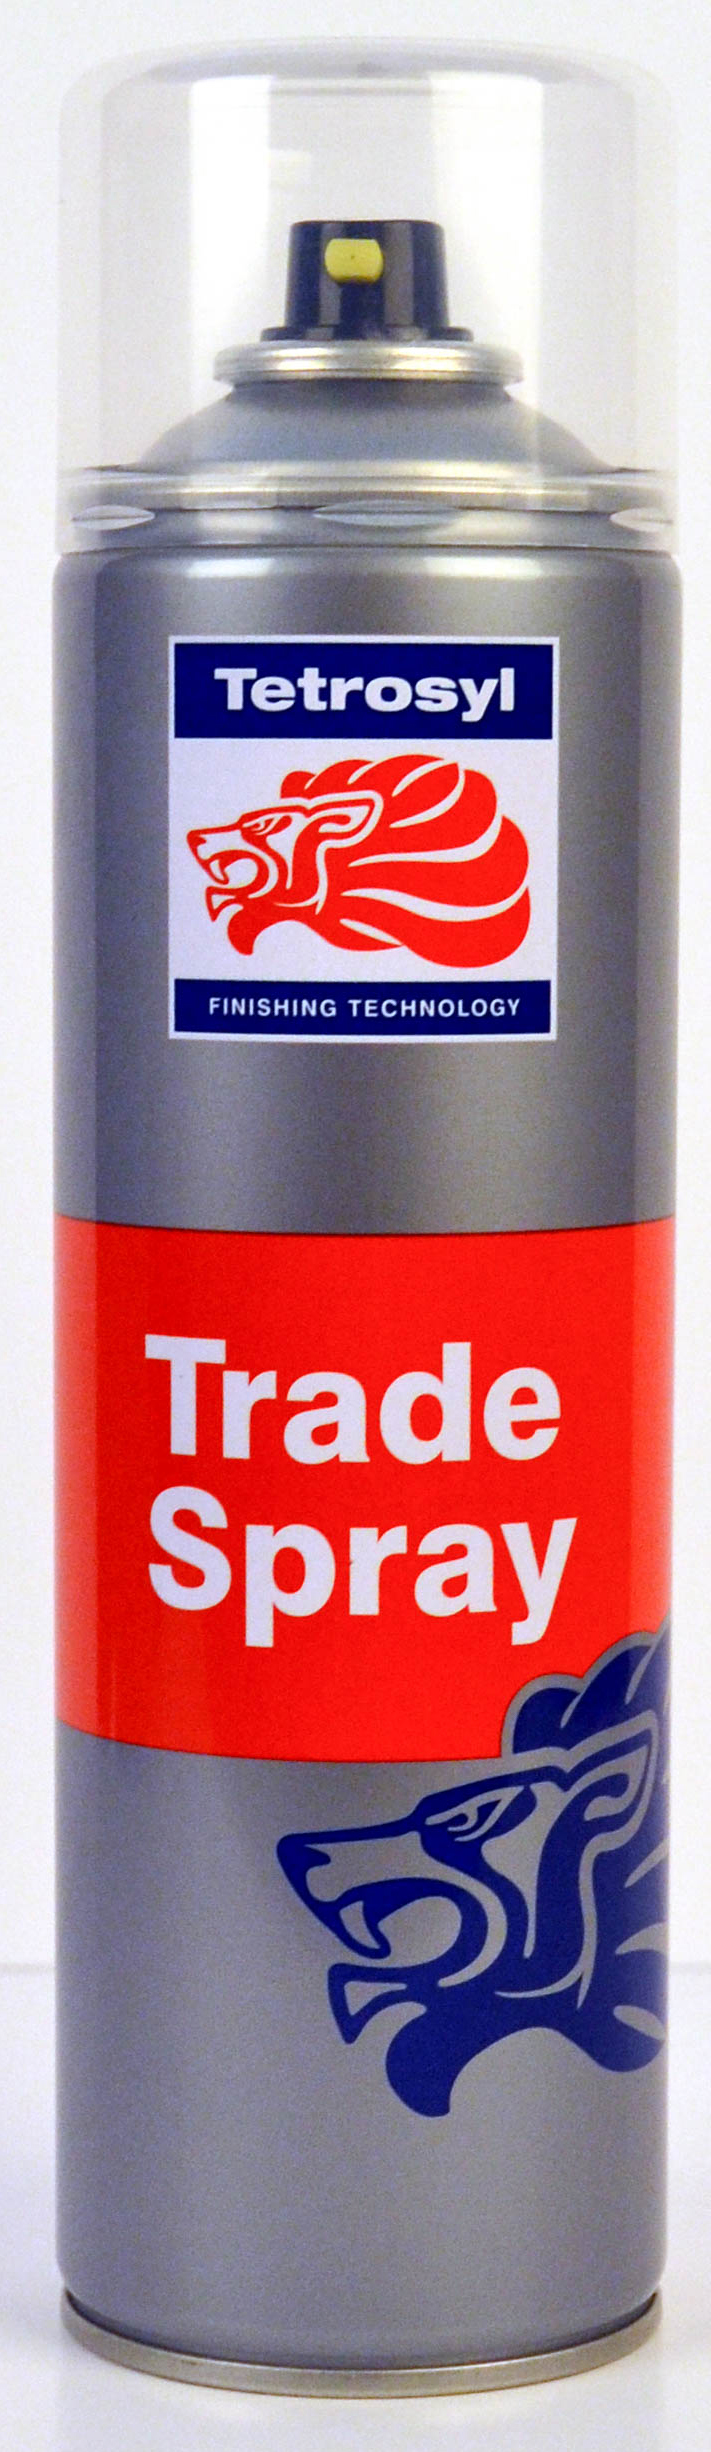 Picture of Tetrosyl Ats020 Trade Spray Plastic Primer 500ml